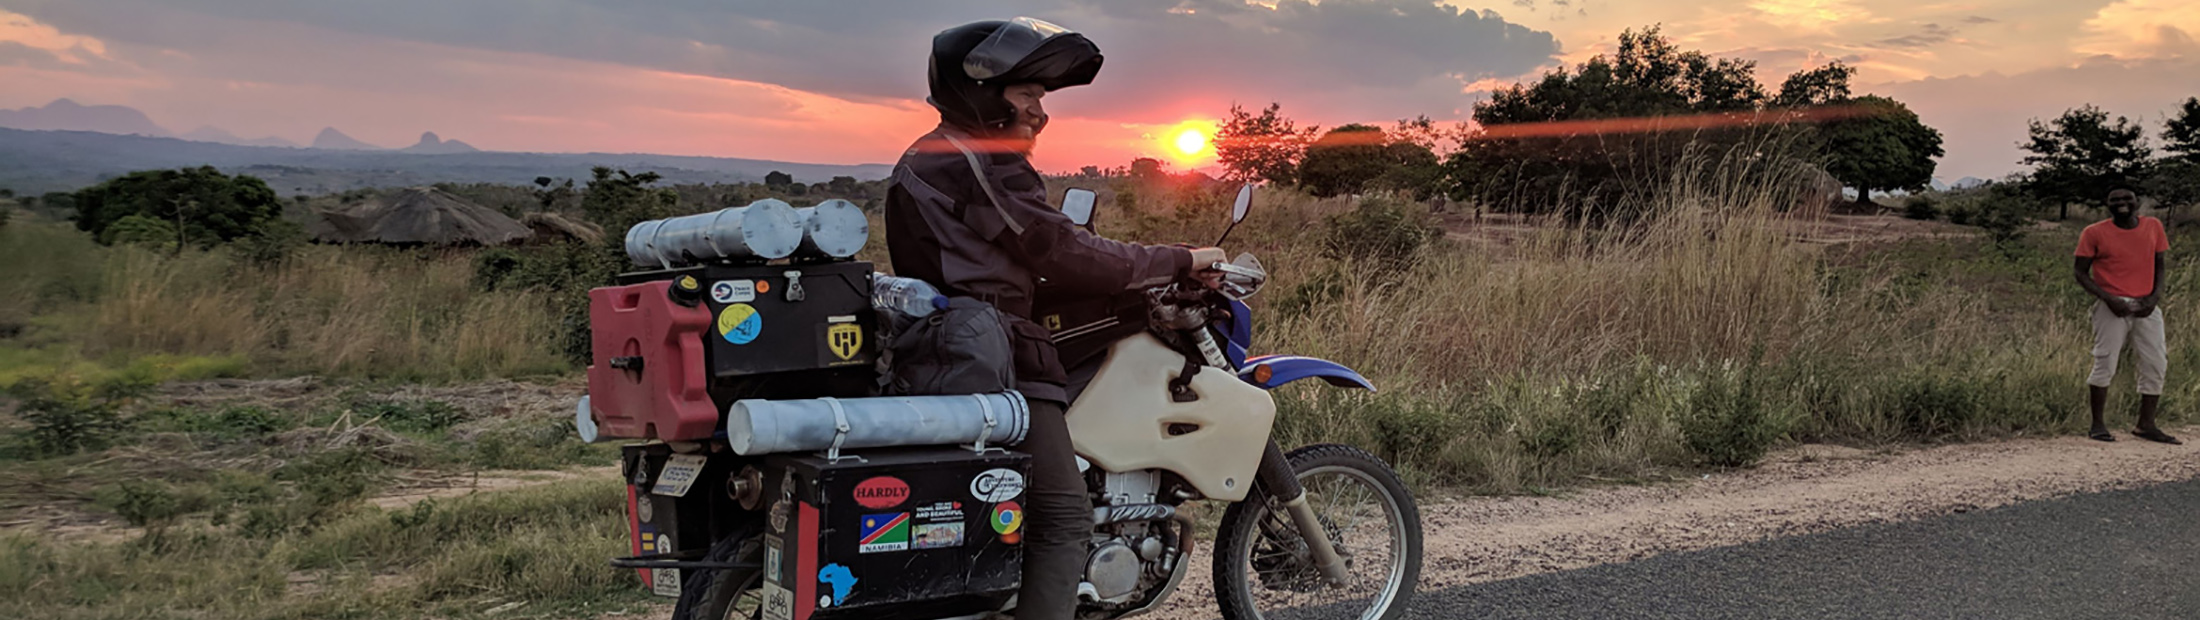 Image of Michigan Engineer Levi Weintraub on his motorbike enjoying the sunset near Nampula, Mozambique